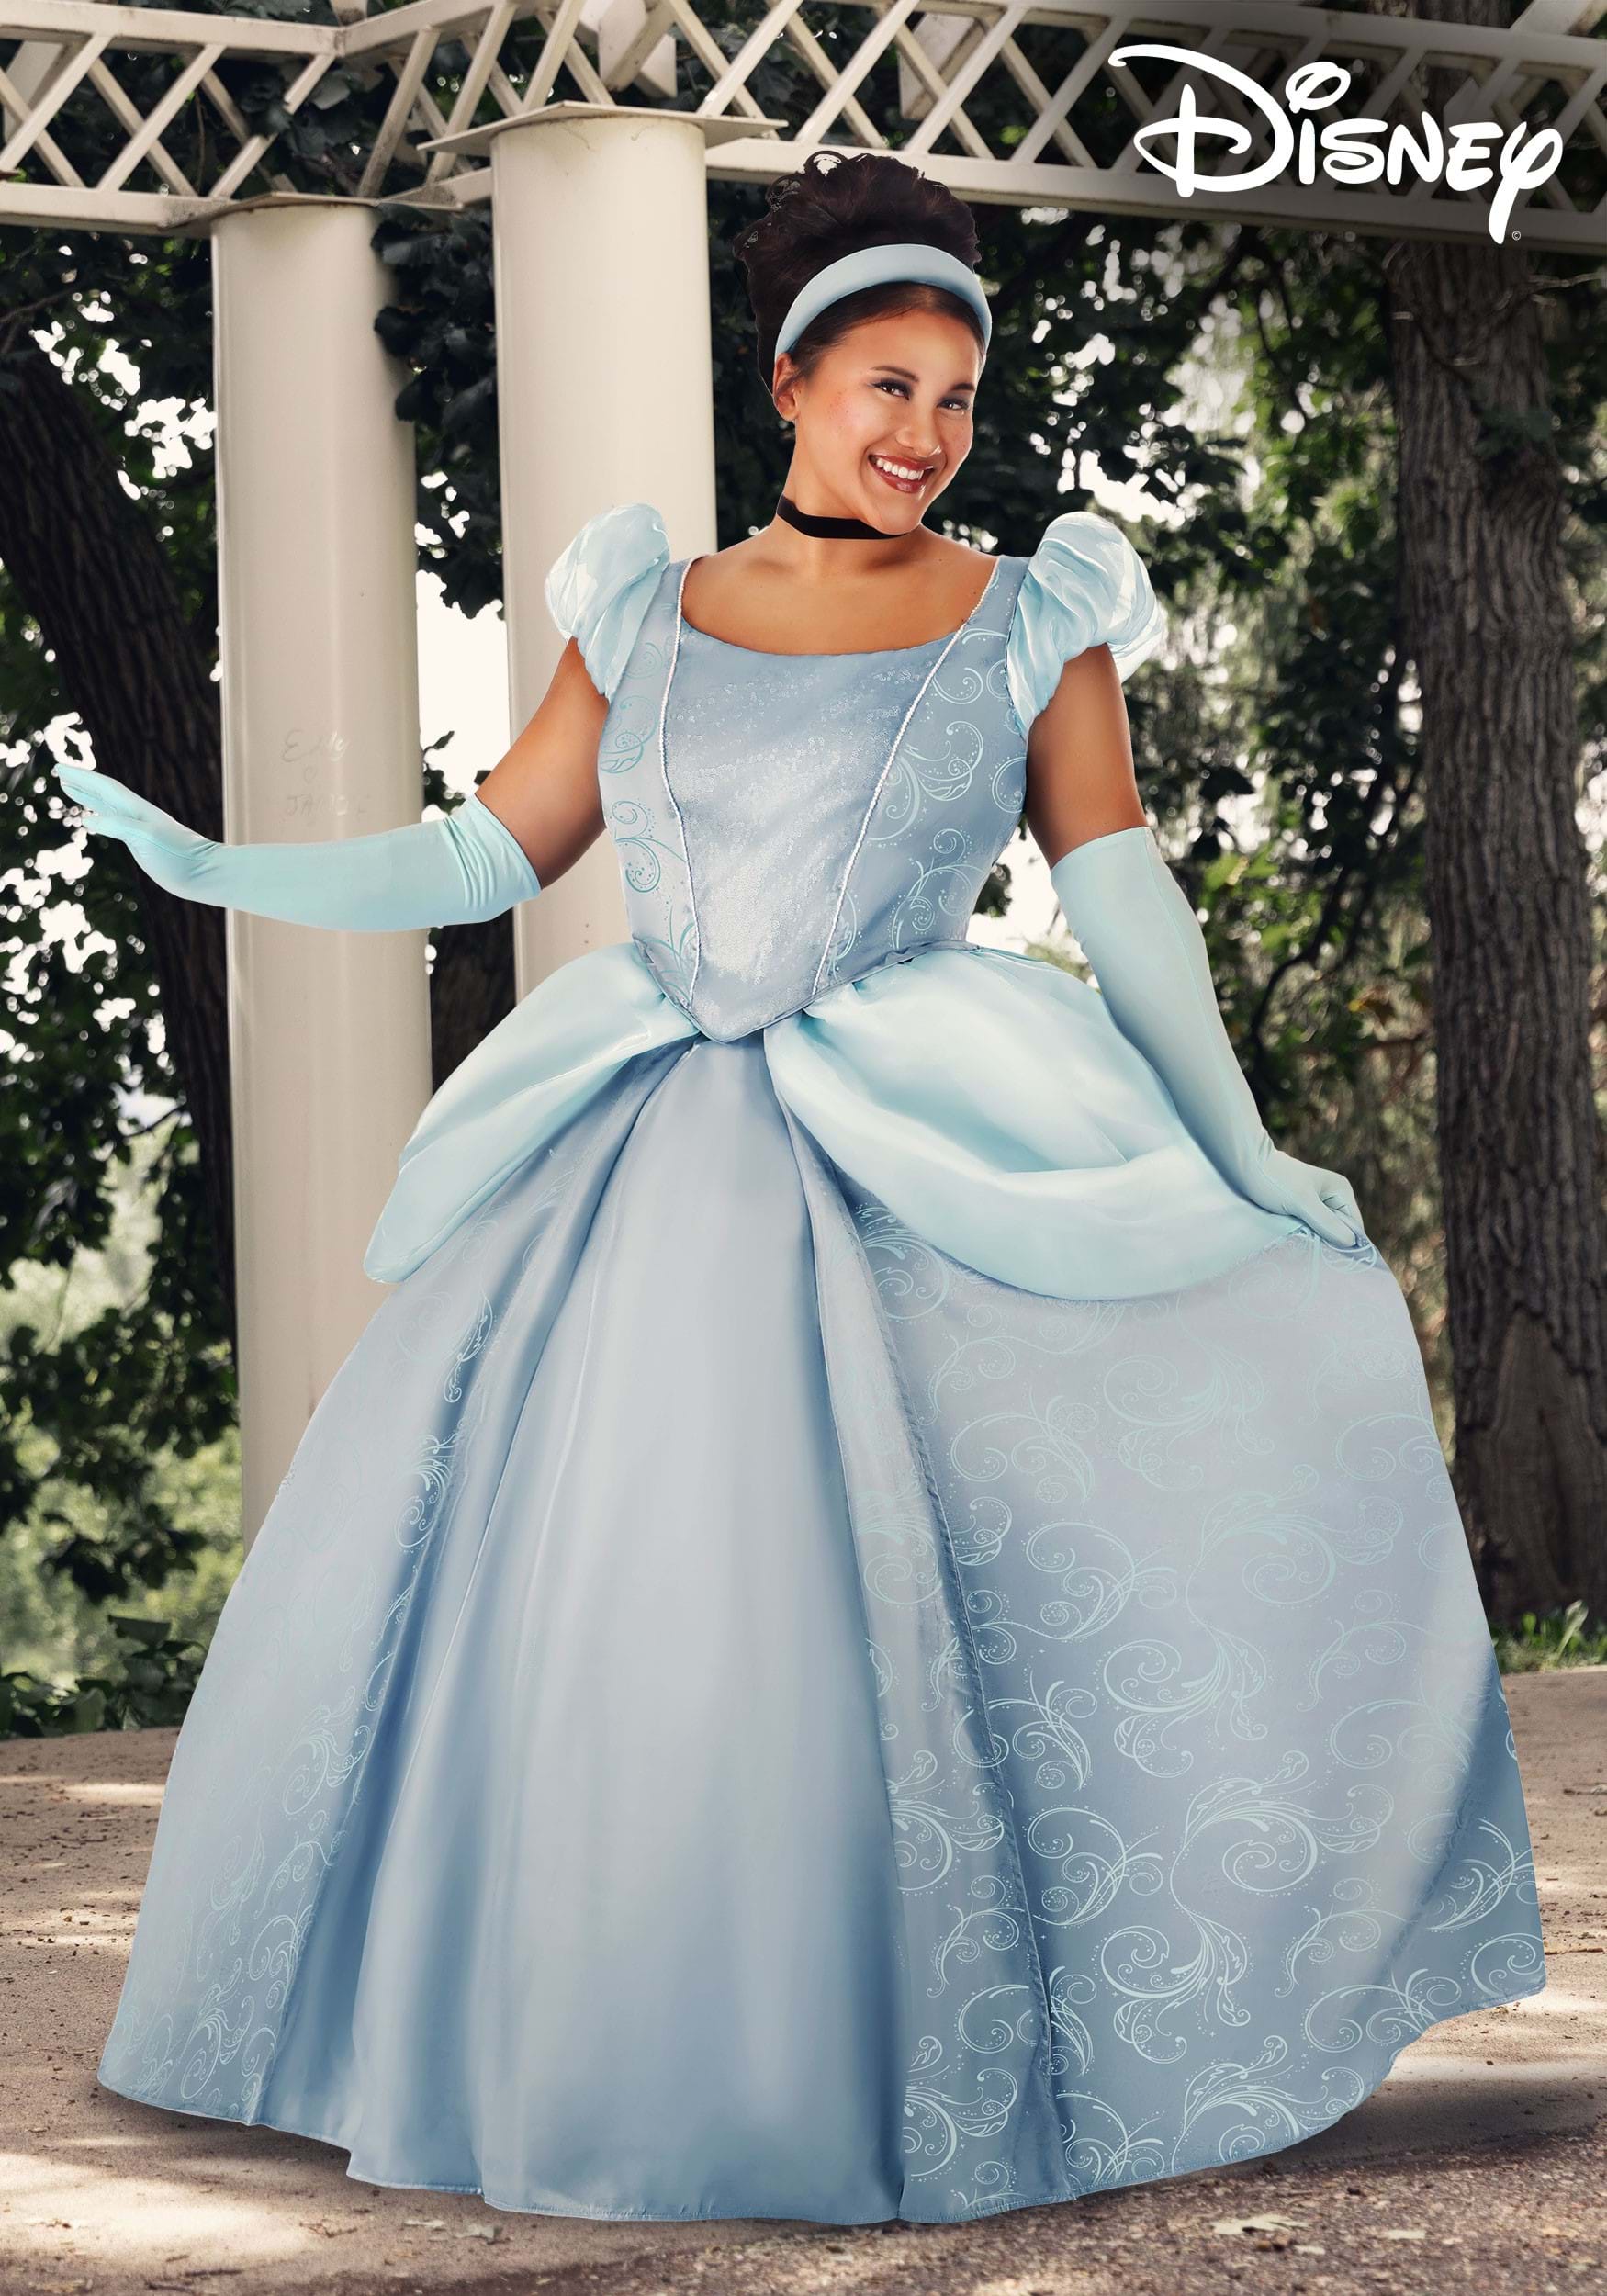 Girl's Disney Premium Cinderella Costume Dress